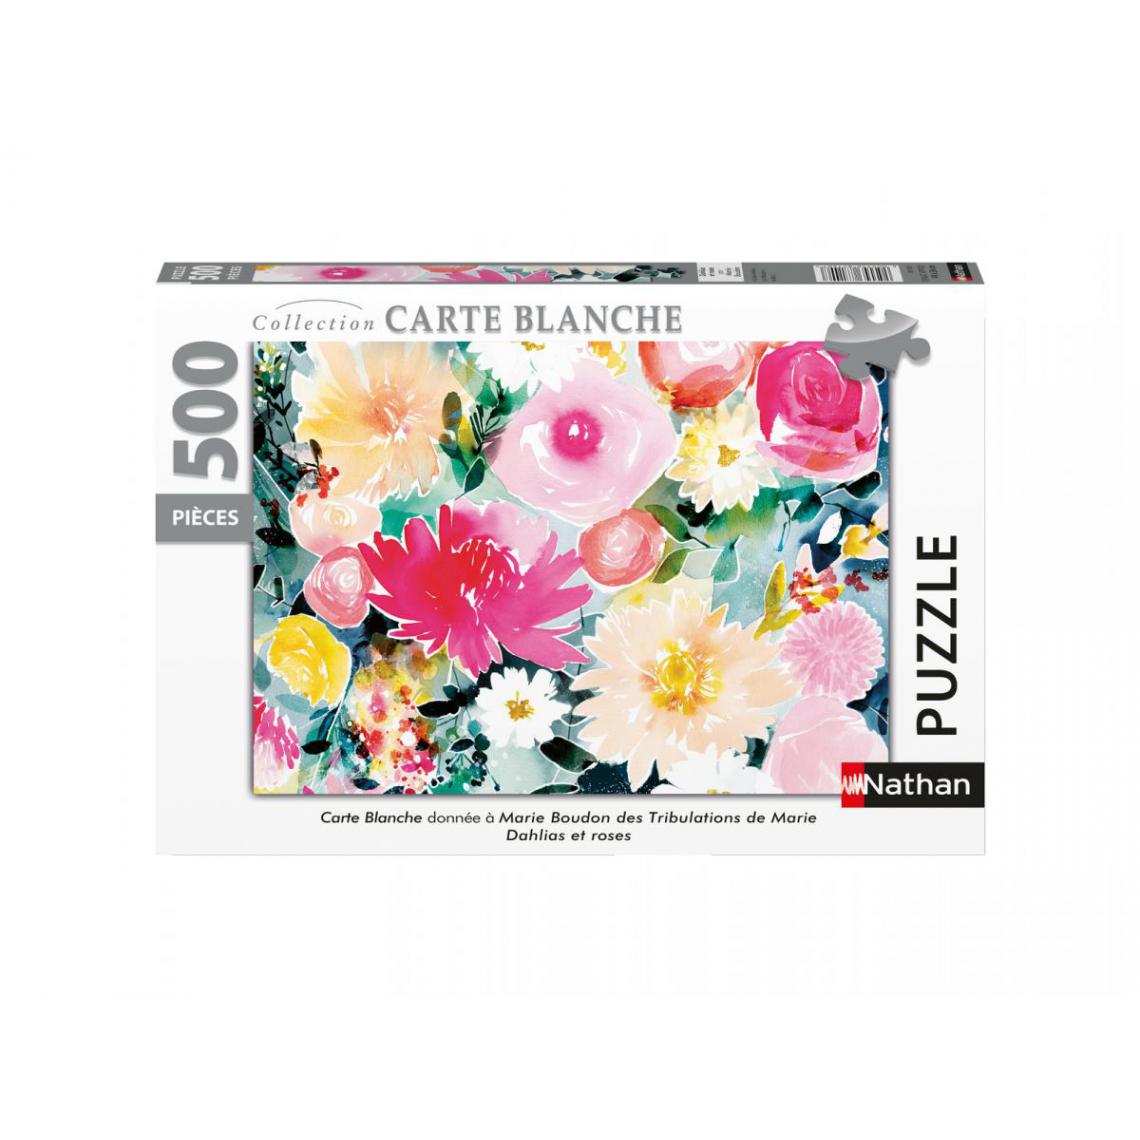 Nathan - Puzzle N 500 p - Dahlias et roses / Marie Boudon (Collect. Carte blanche) - Animaux